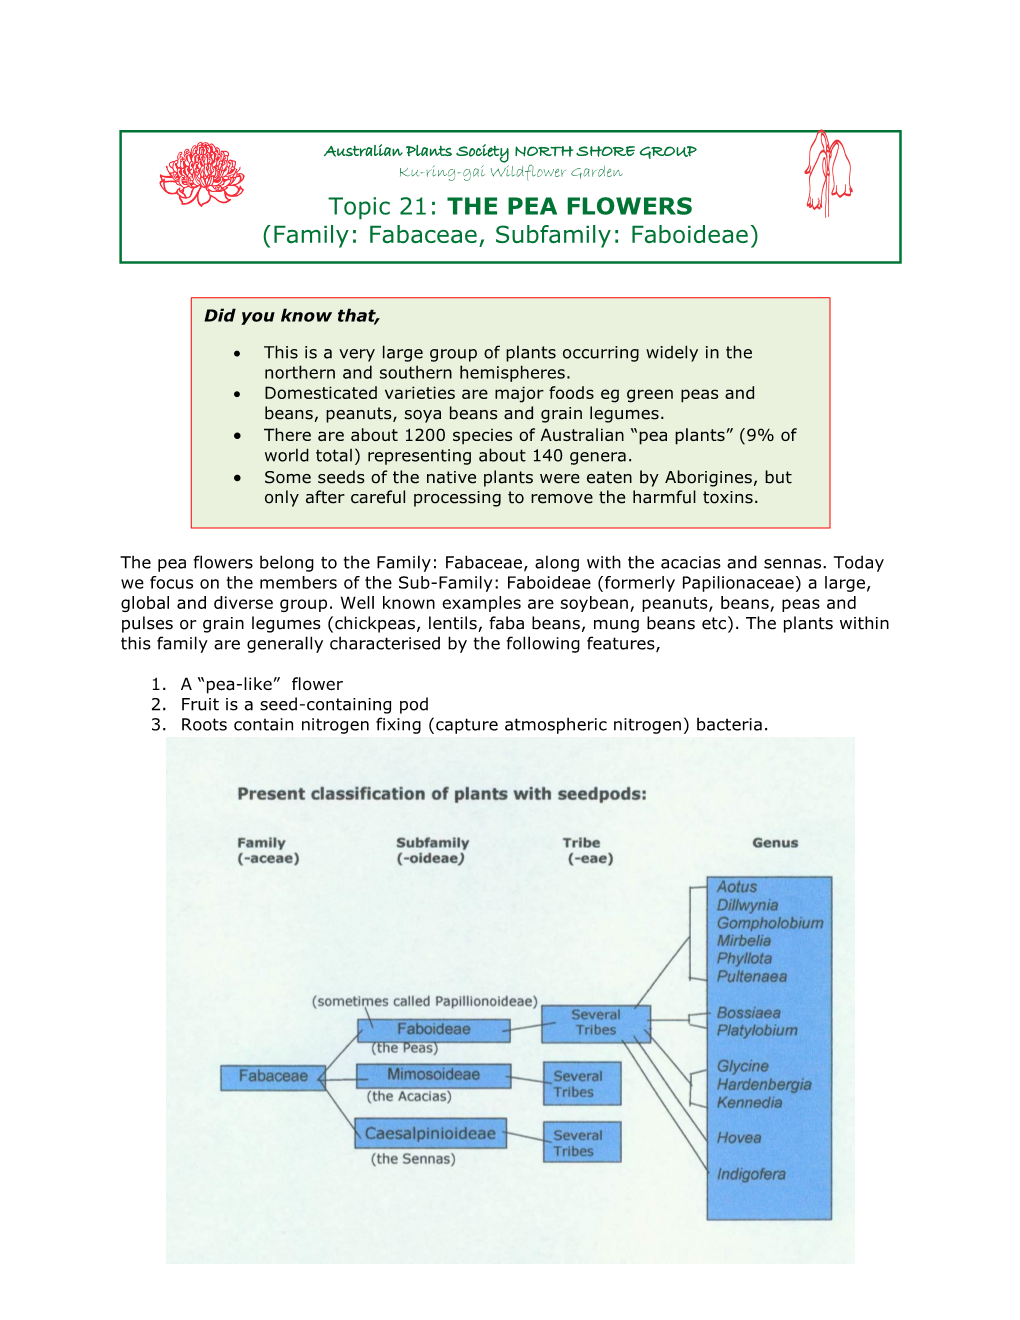 Topic 21: the PEA FLOWERS (Family: Fabaceae, Subfamily: Faboideae)